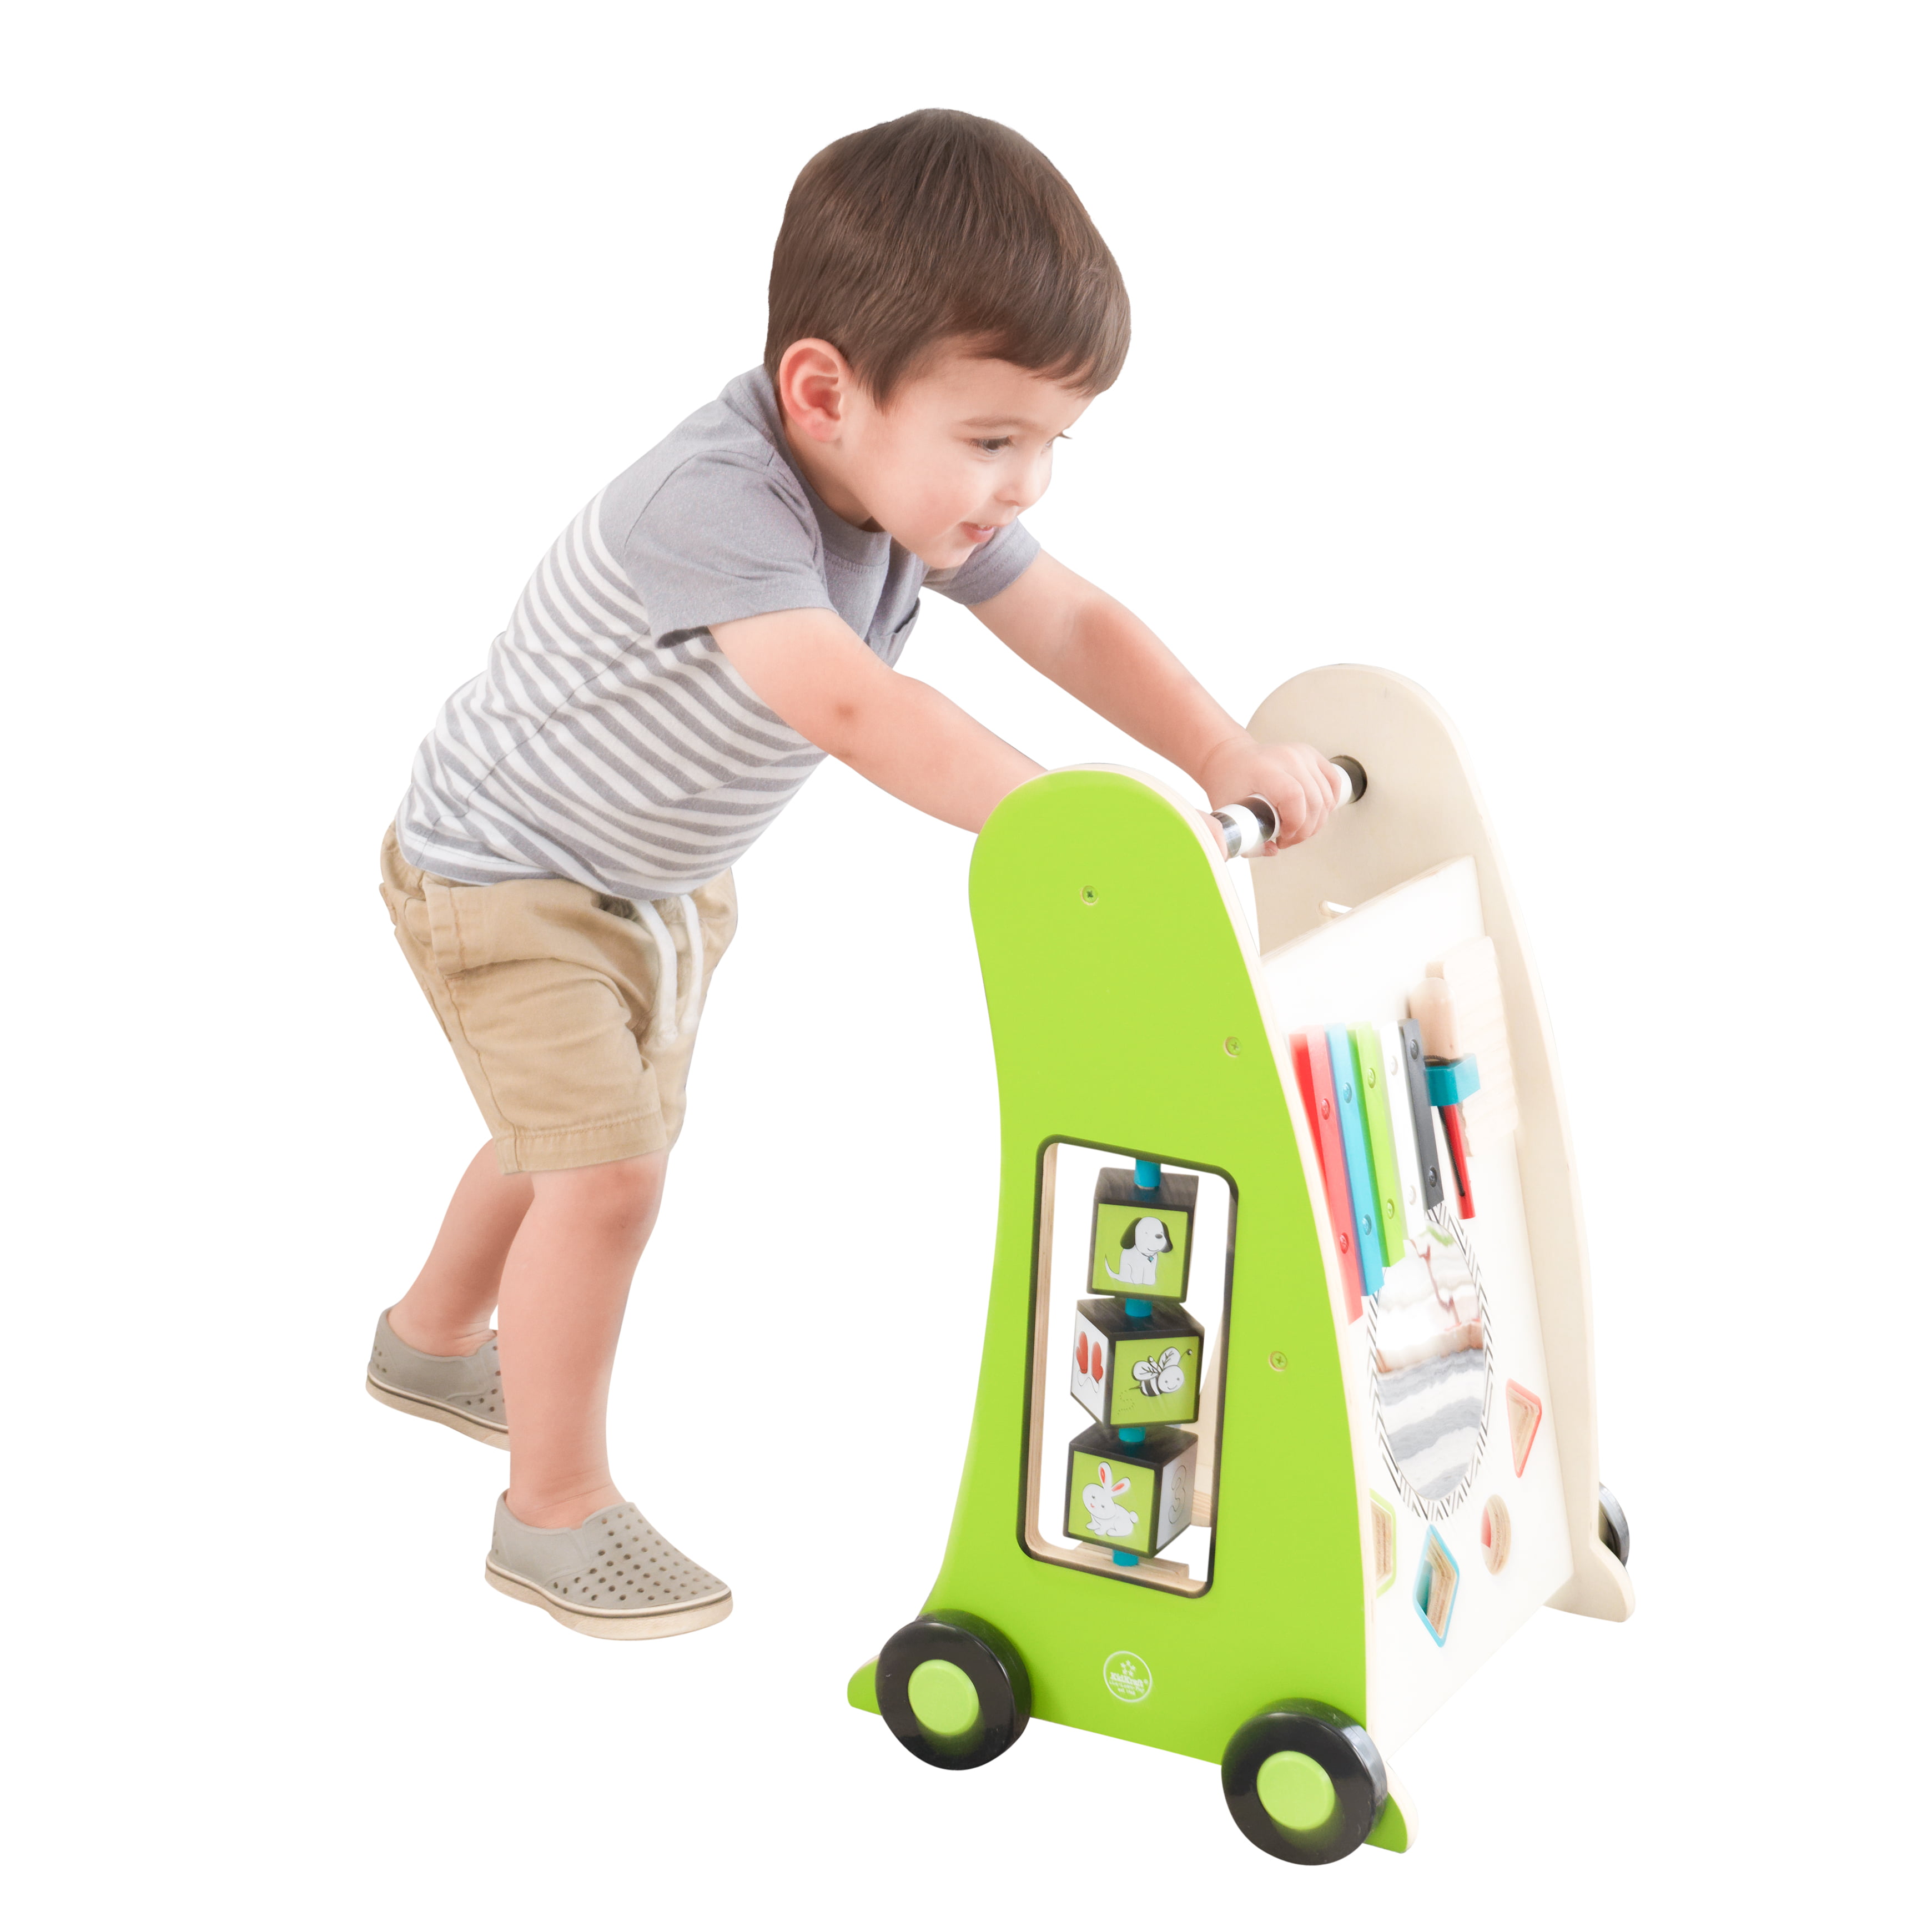 KidKraft Push Along Play Cart - Walmart 